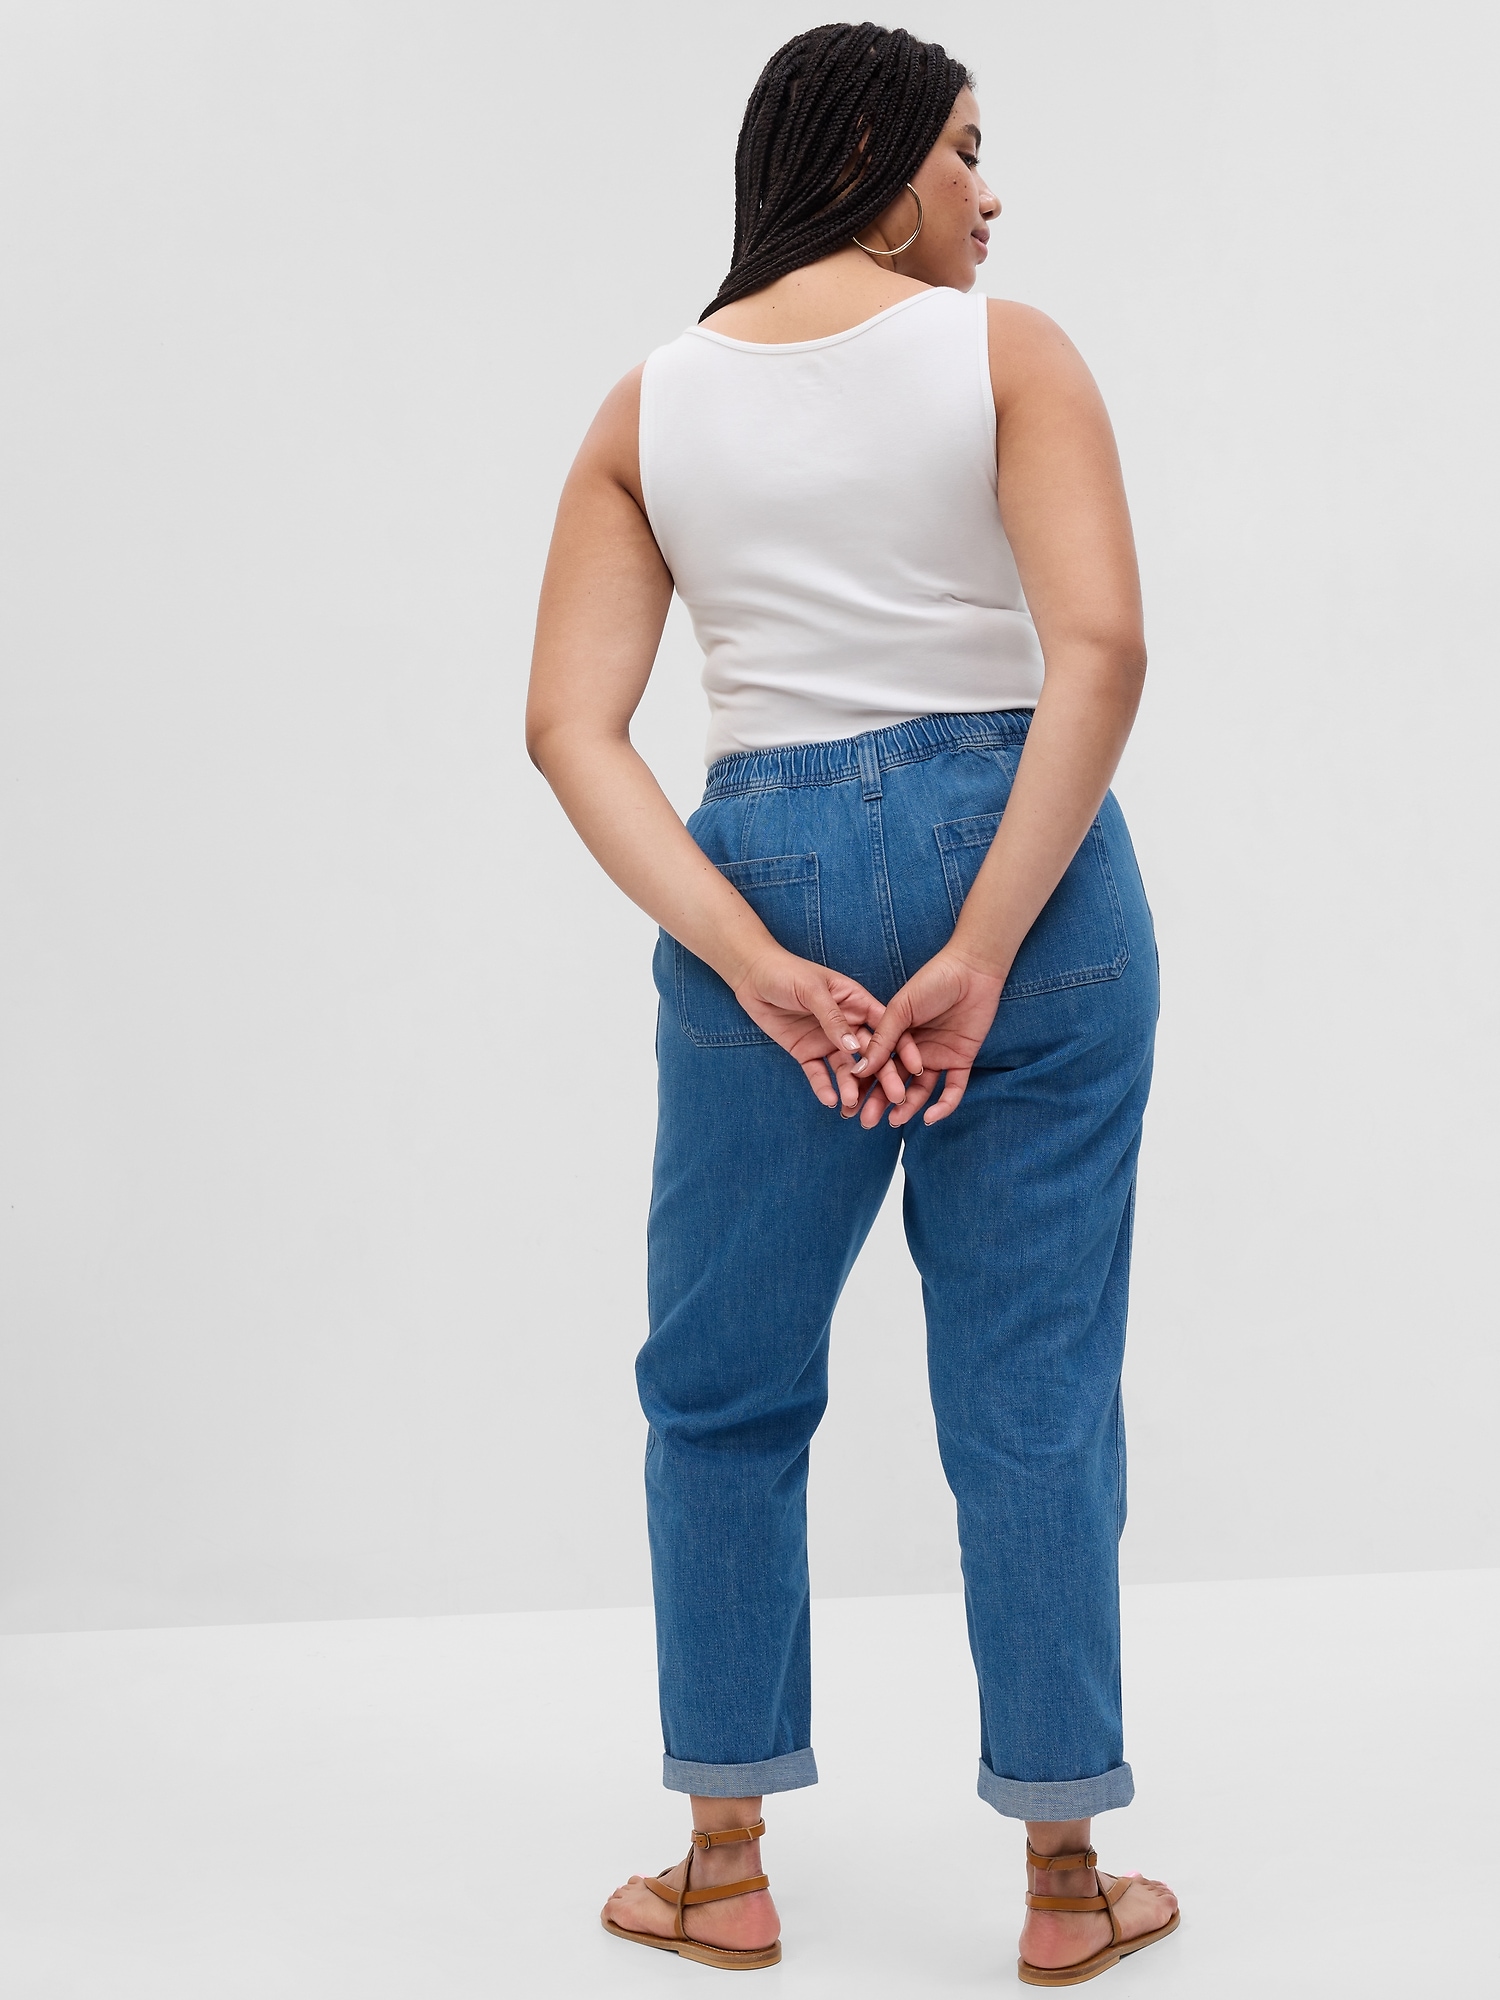 Jeanex Women's Slim Fit Comfortable Denim Jeans Pants for Casual Wear